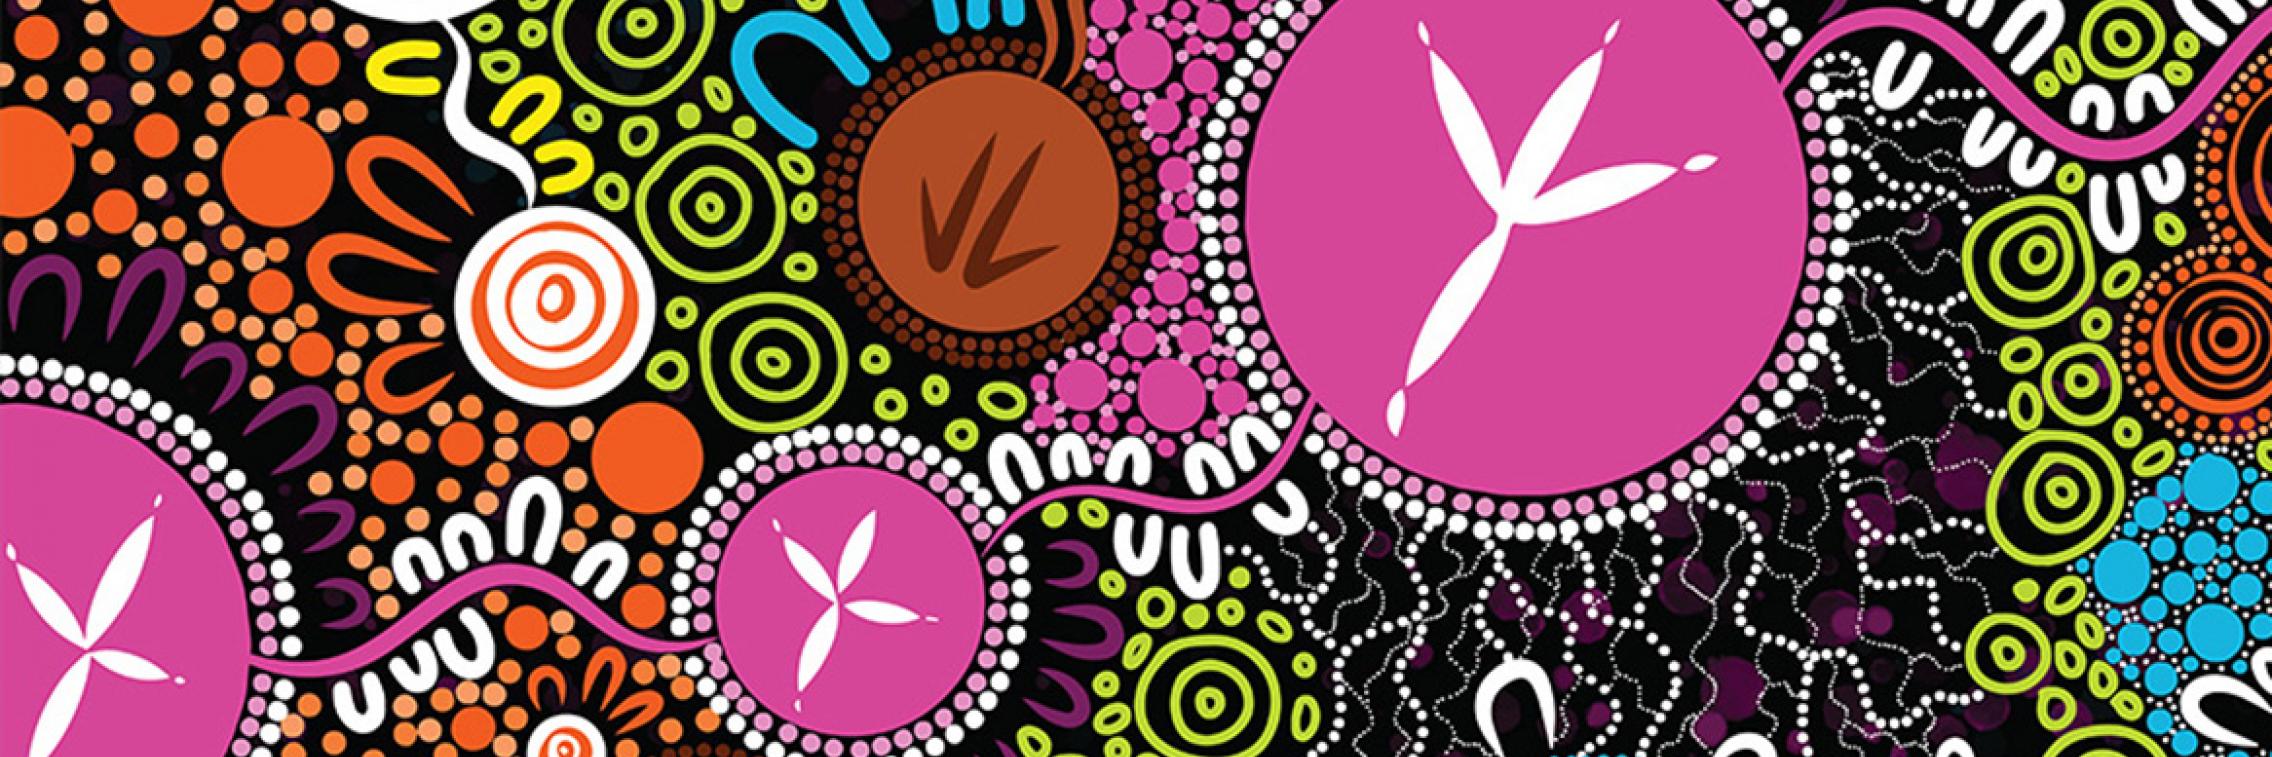 Aboriginal artwork "Journey" by Kaurna, Ngarrindjeri, Narungga, and Wirangu artist Gabriel Stengle